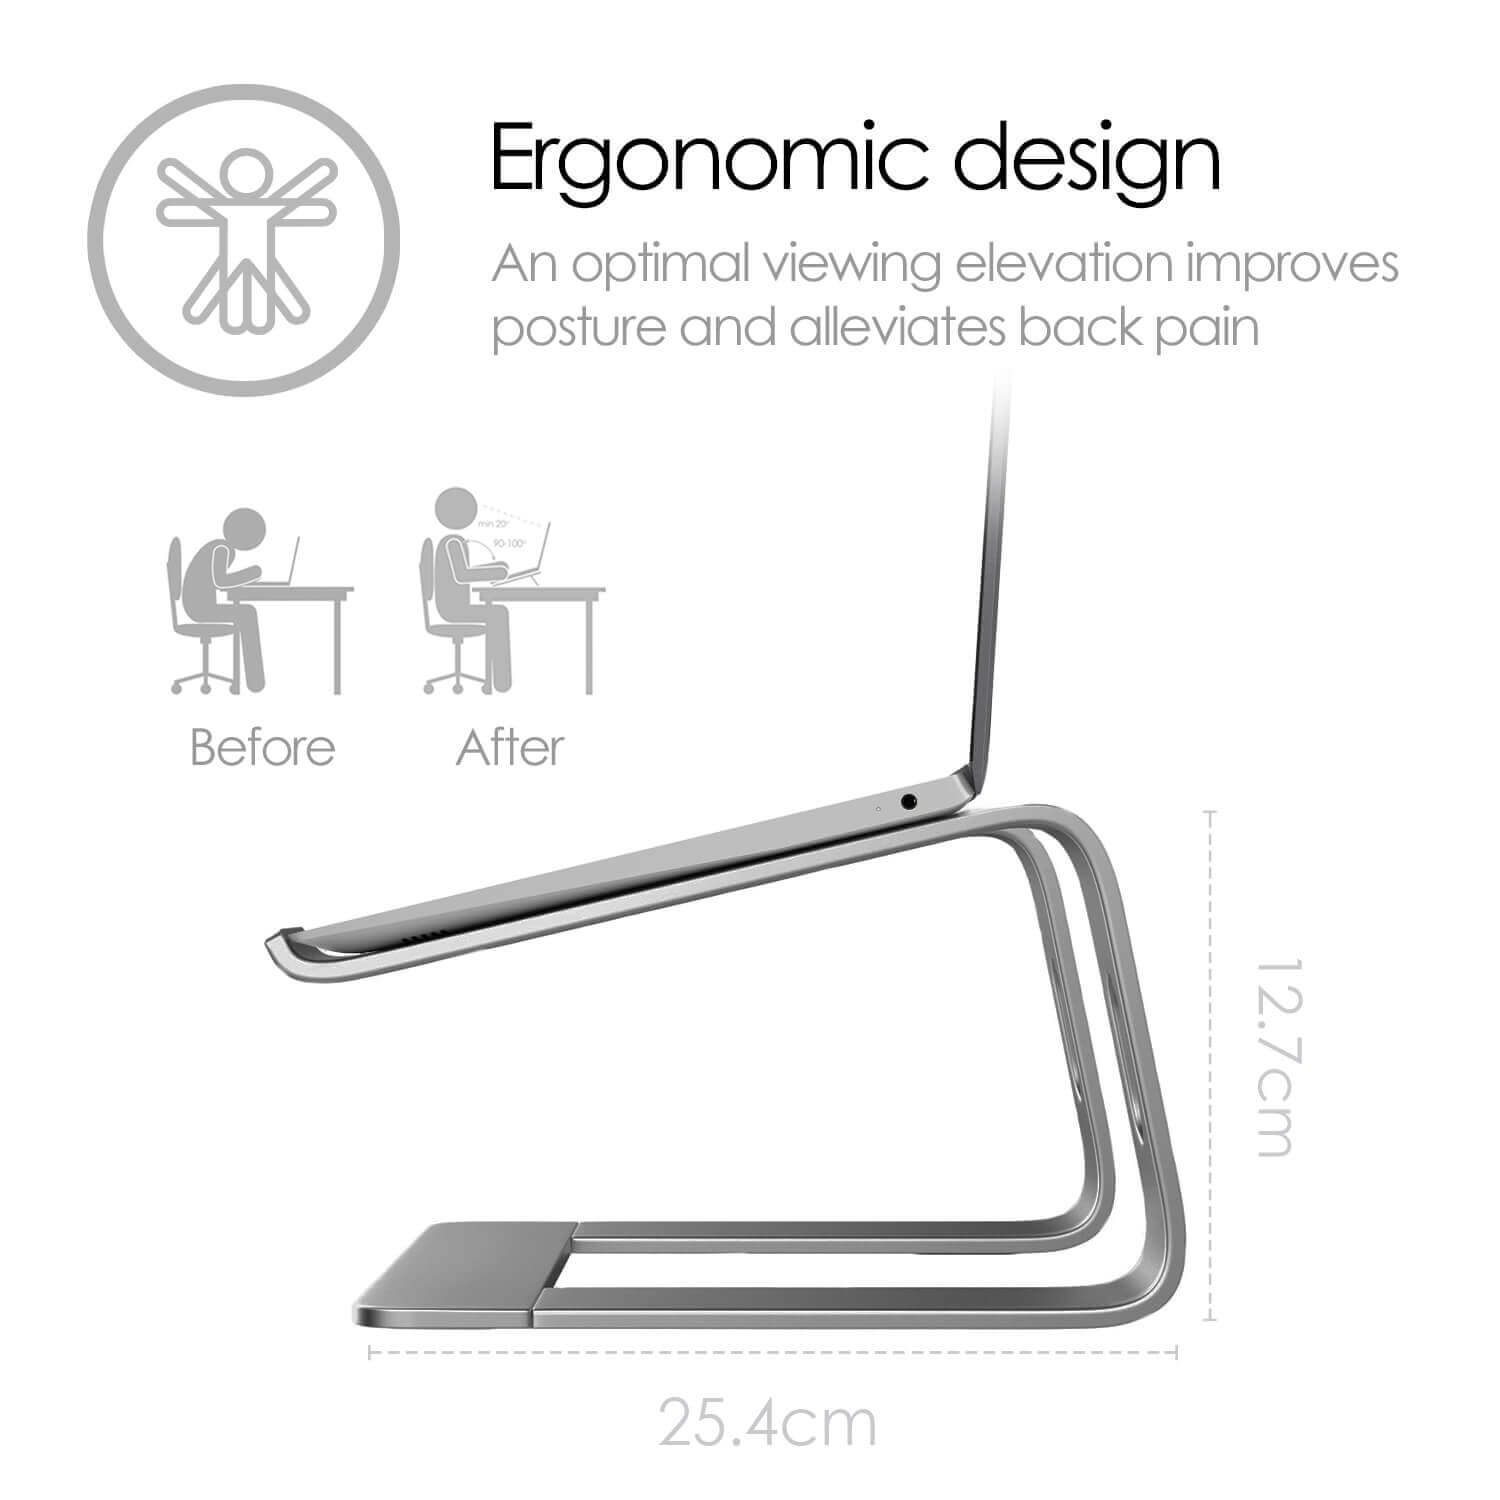 Ergonomic laptop stand alleviates back pain and eye strain